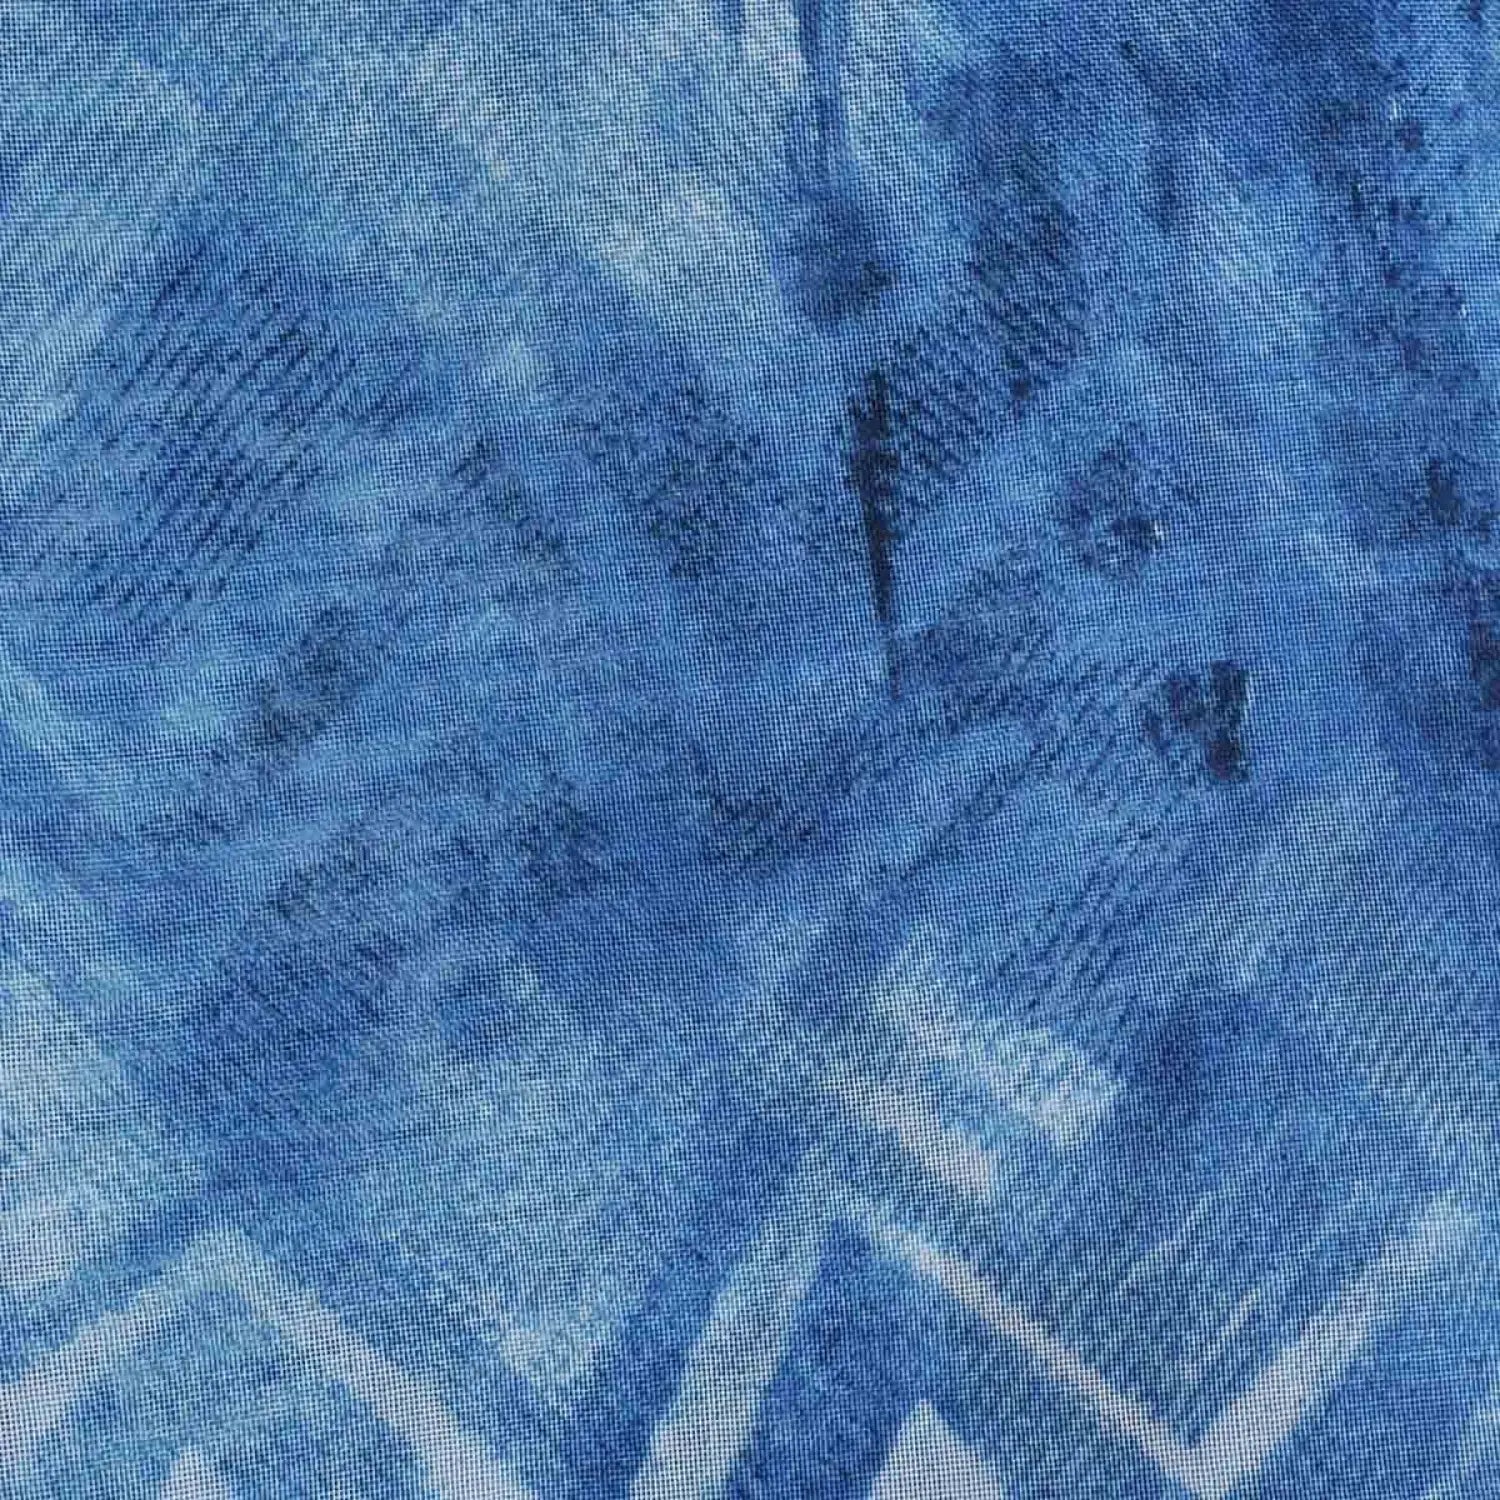 Blue and white diamond pattern chiffon scarf with Aztec animal snake print.